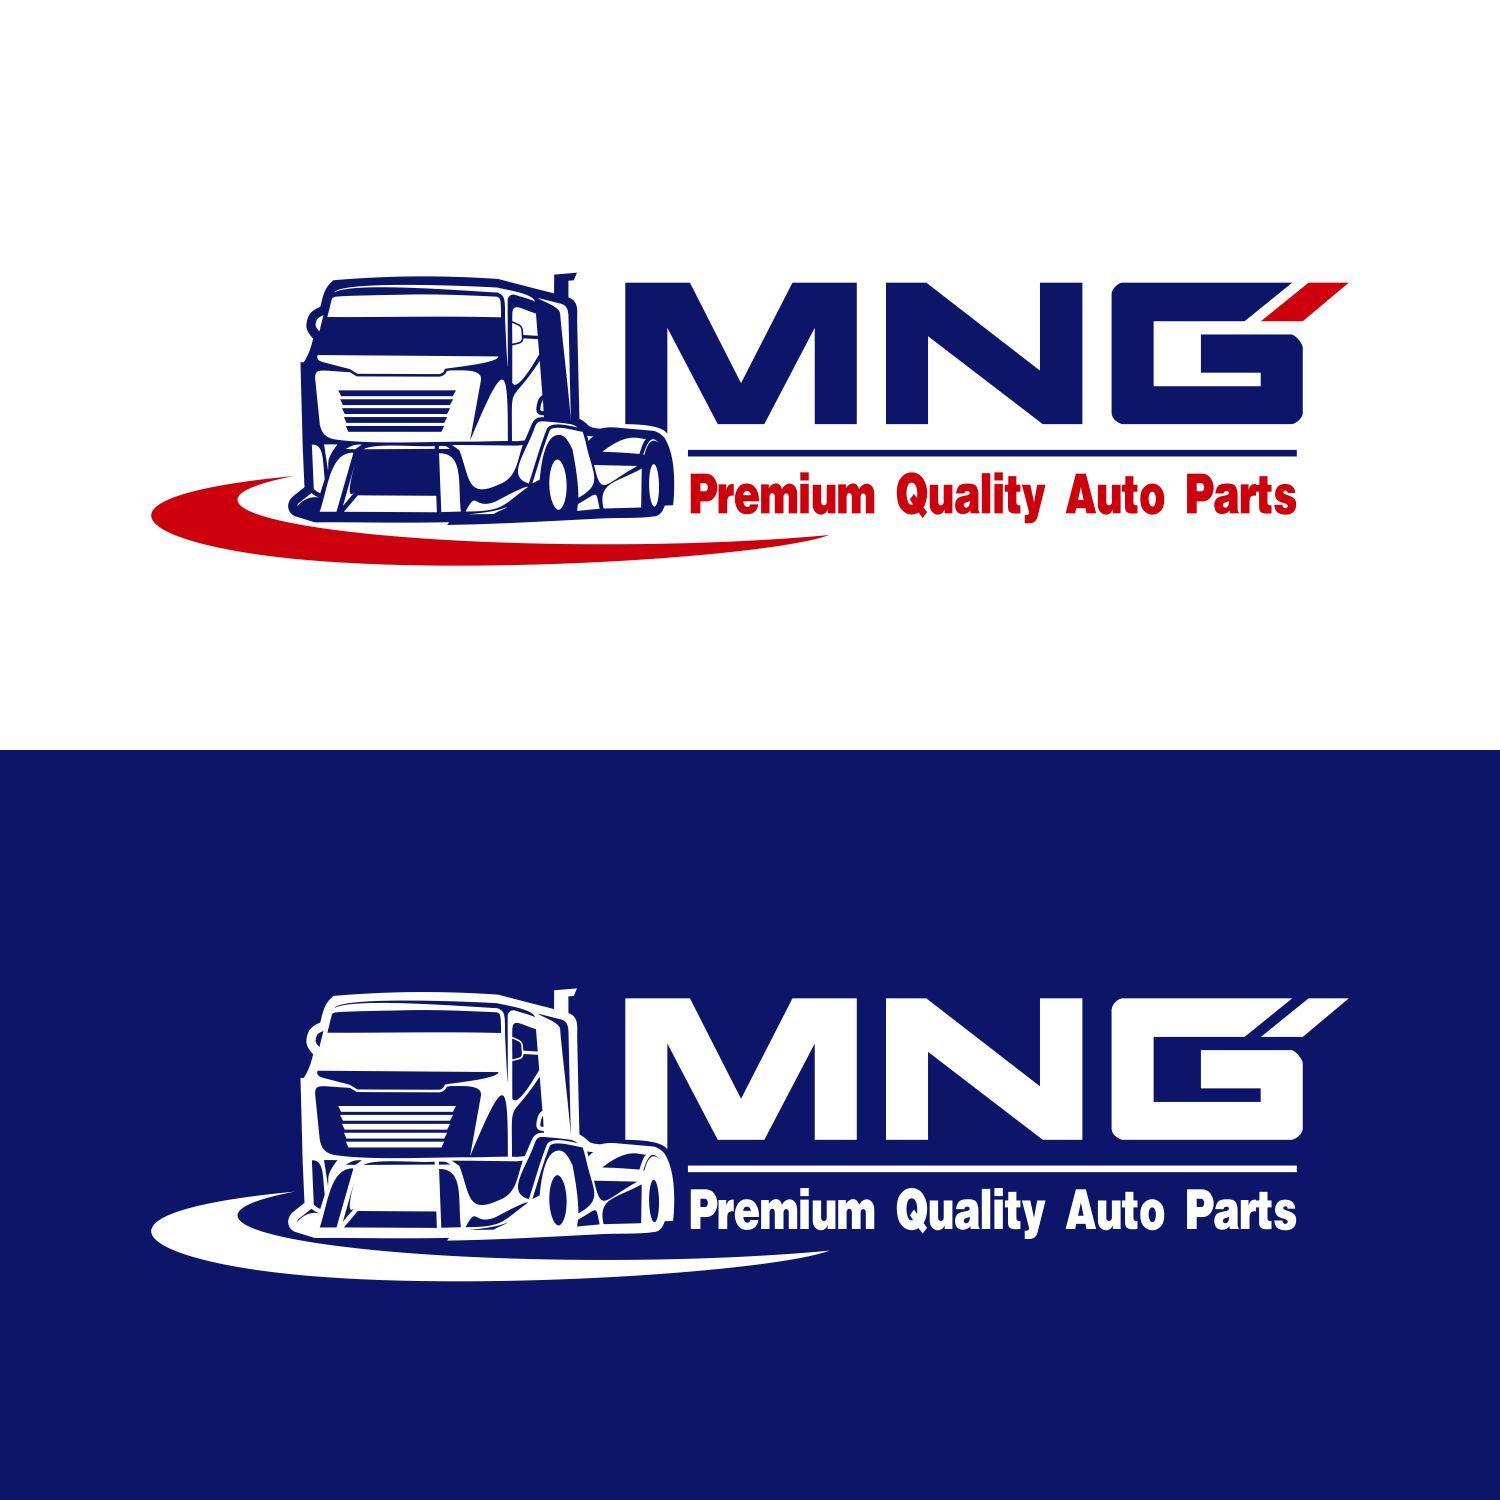 Auto Parts Brand Logo - Professional Logo Designs. Automotive Logo Design Project for a